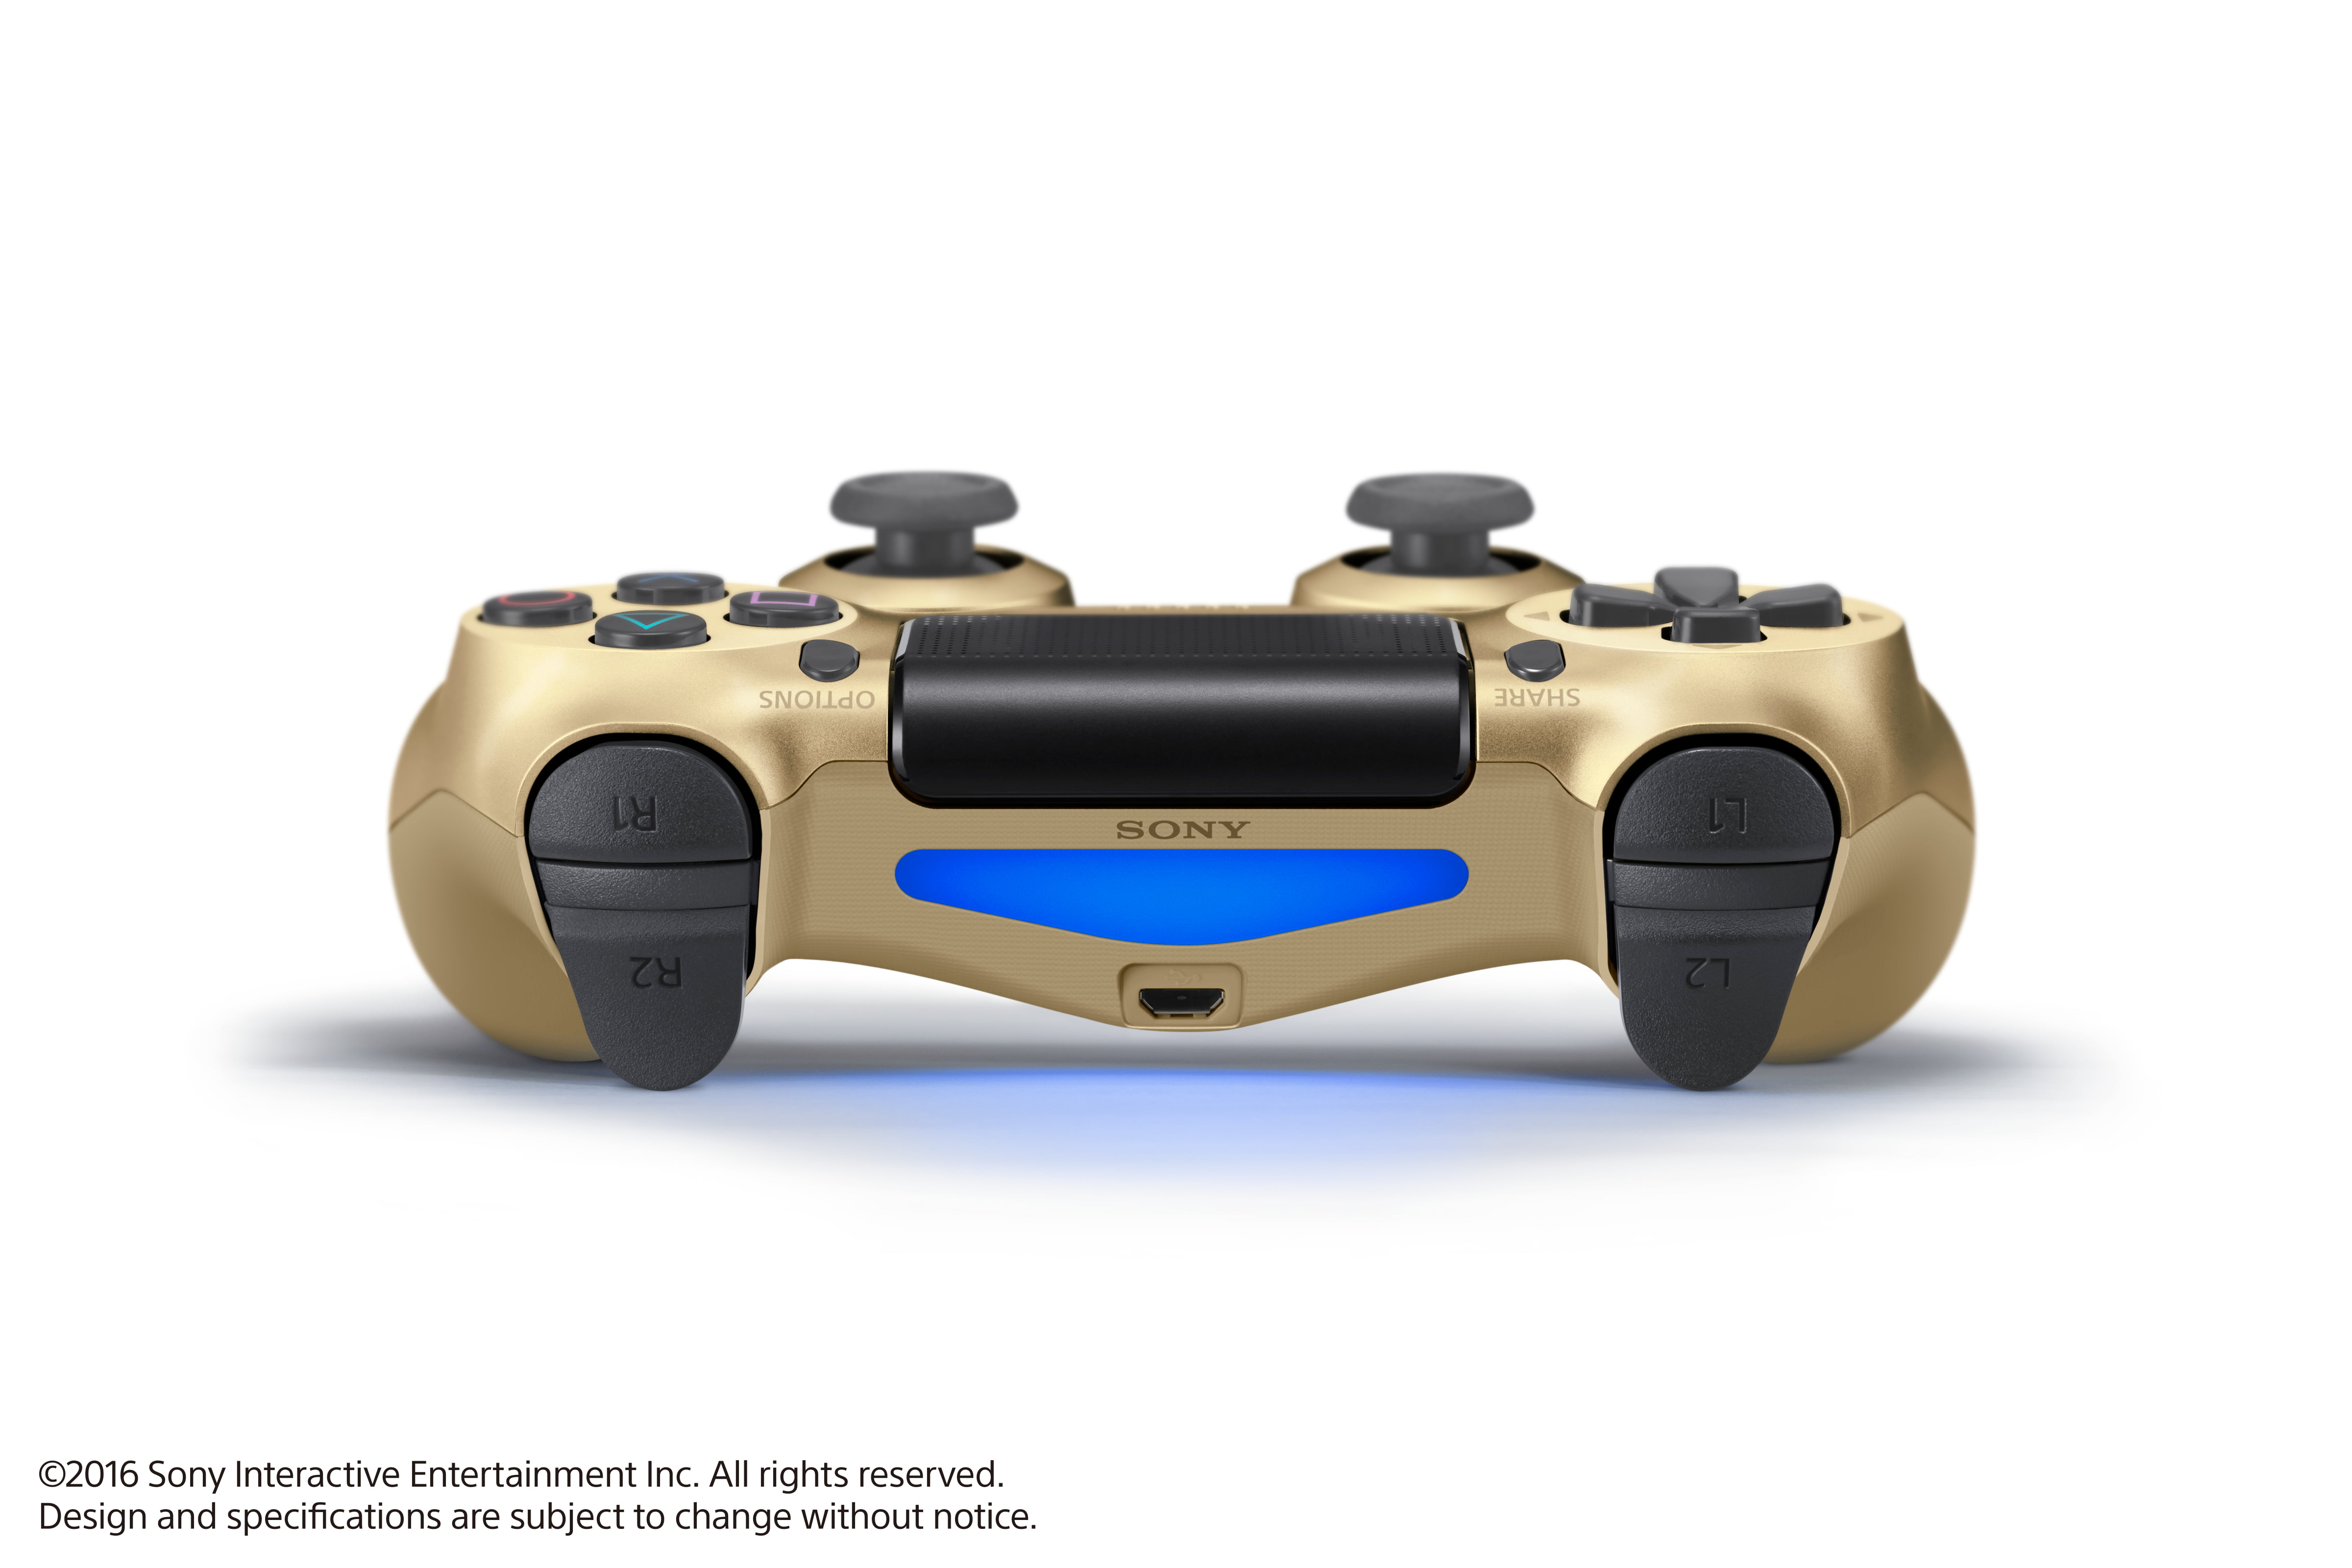 Sony PlayStation 4 DualShock 4 - Walmart.com